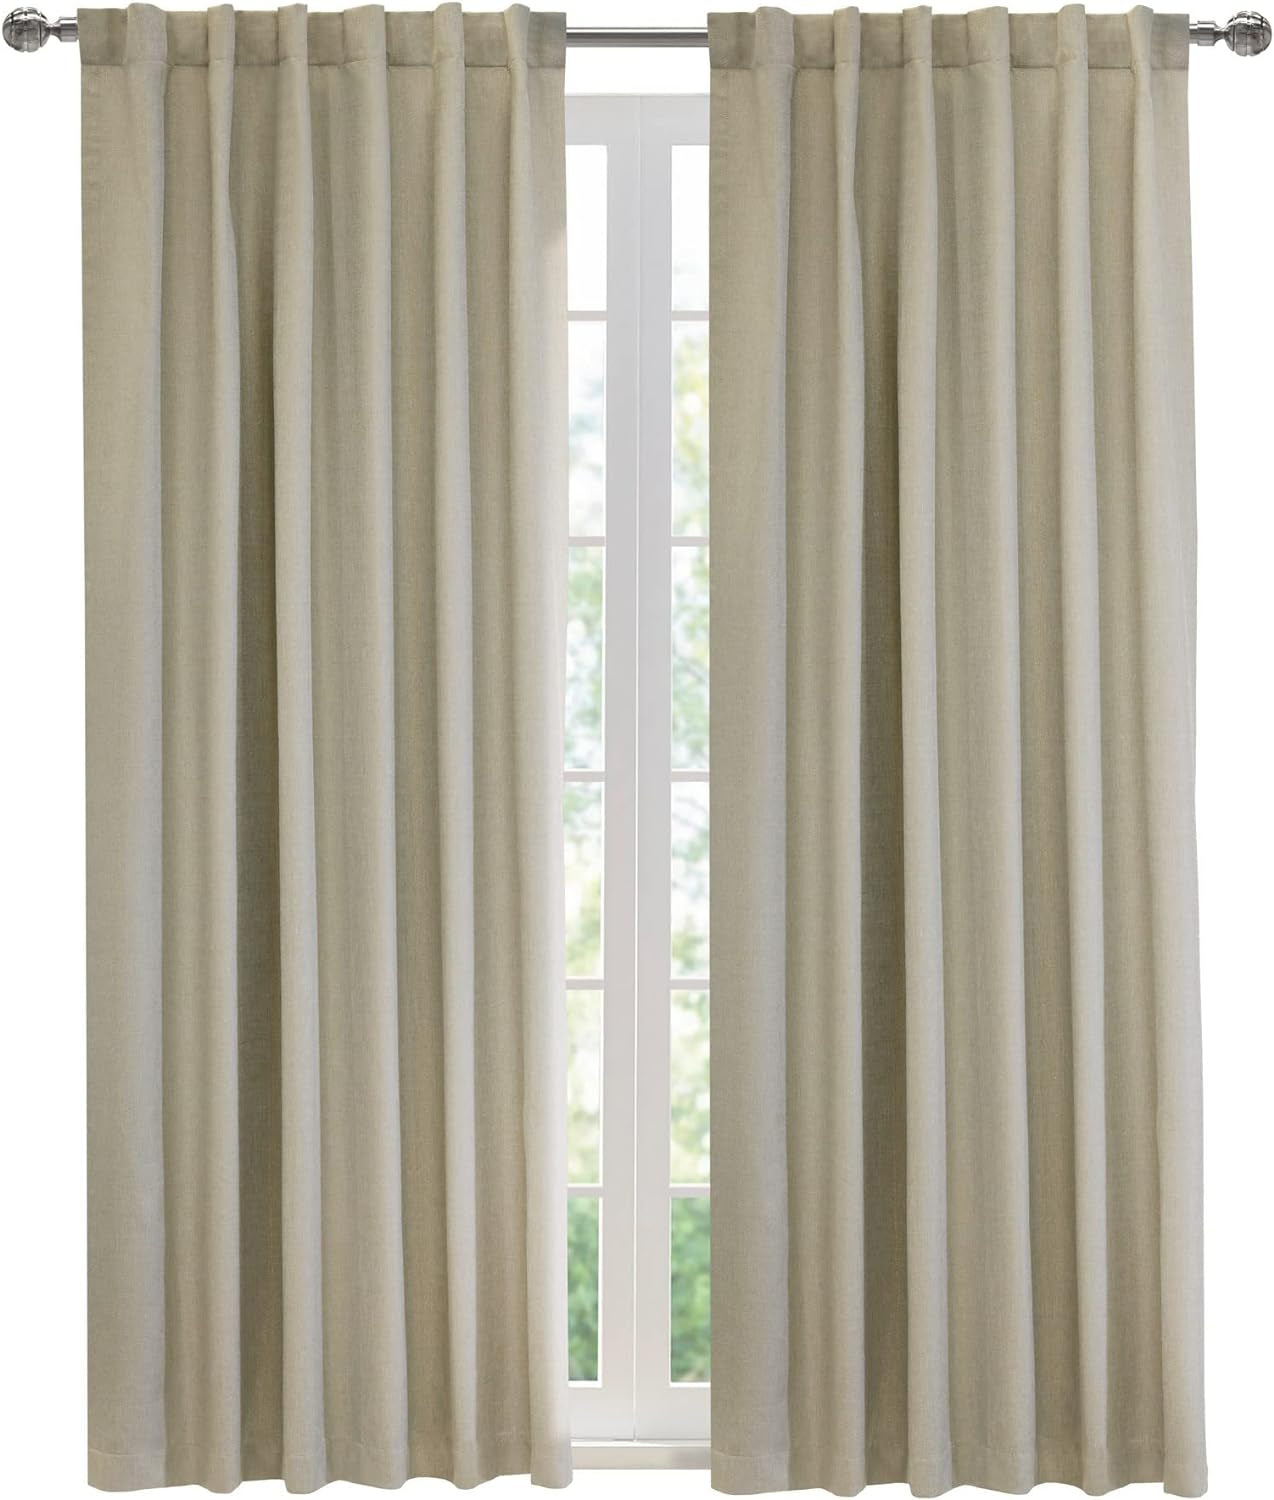 Thermalplus Baxter Back Tab Curtain Panel Window Dressing 52 X 84 in Oatmeal (71993-142-52-84-125)  Thermaplus   